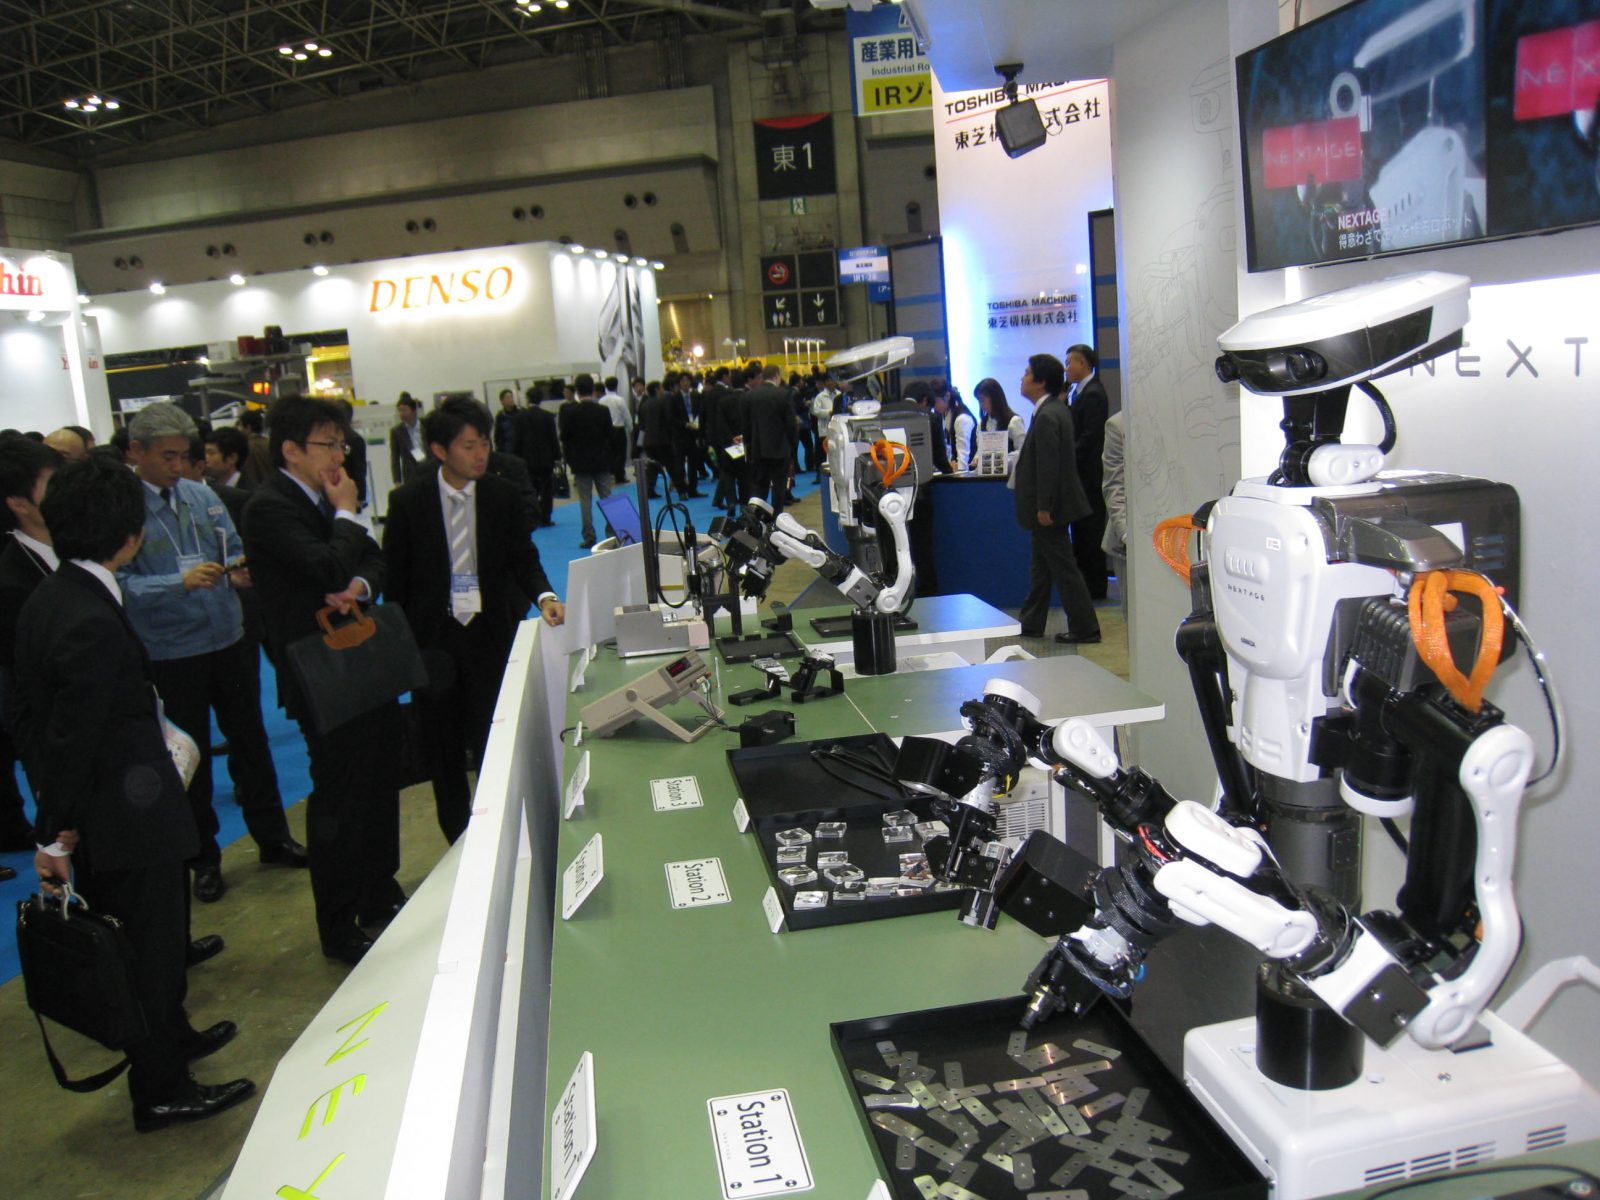 AT TOKYO'S INTERNATIONAL ROBOTICS EXHIBITION, INNOVATION WAS THE STAR